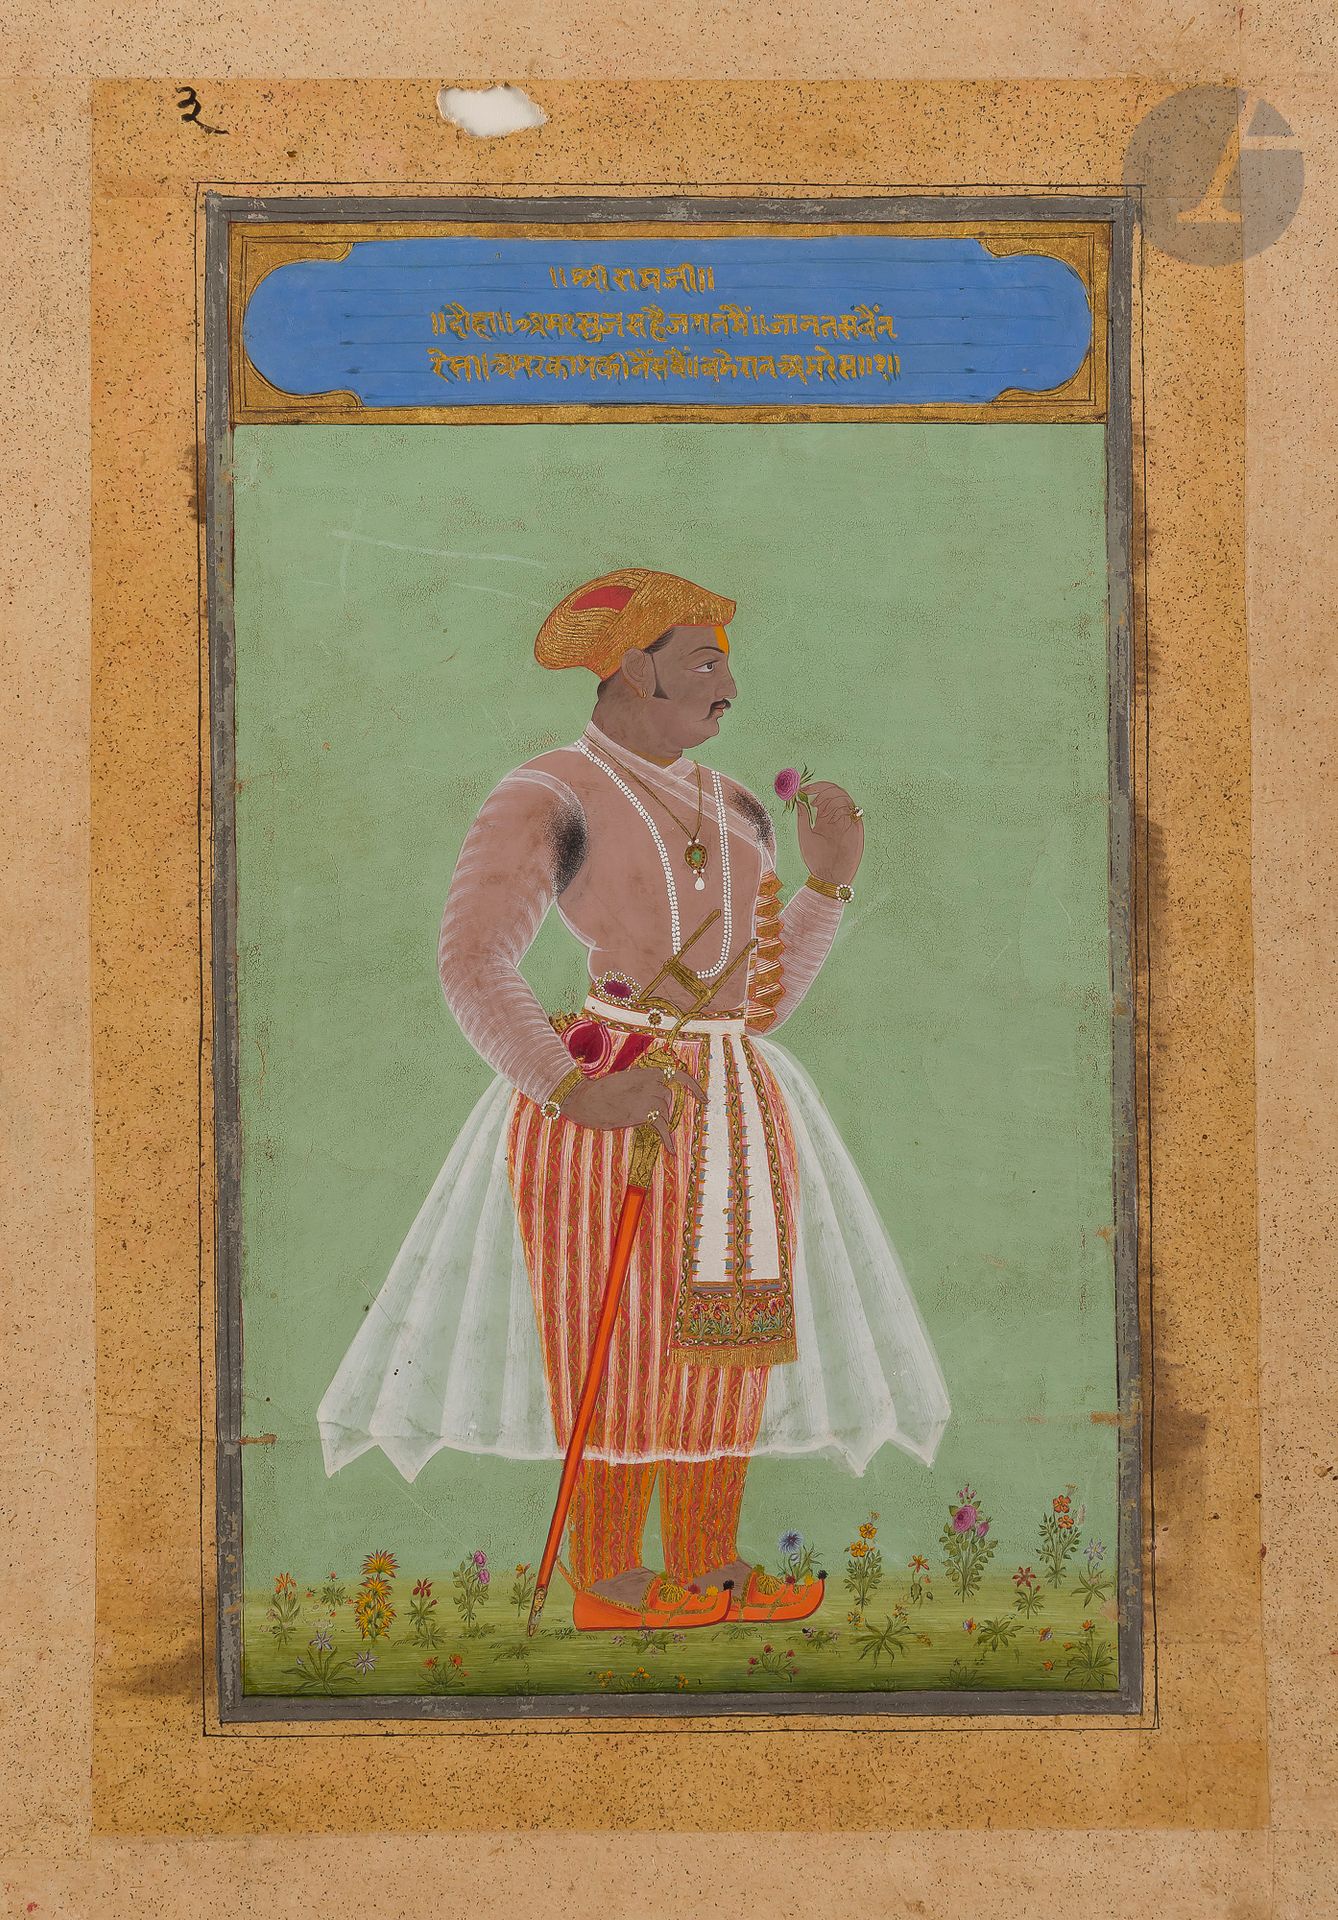 Null 阿玛尔-辛格一世的彩绘肖像，北印度，拉贾斯坦邦，梅瓦尔，乌代普尔学校，18世纪
纸上颜料和黄金描绘了马哈拉纳-阿玛尔-辛格一世站在花团锦簇的草坪上，面&hellip;